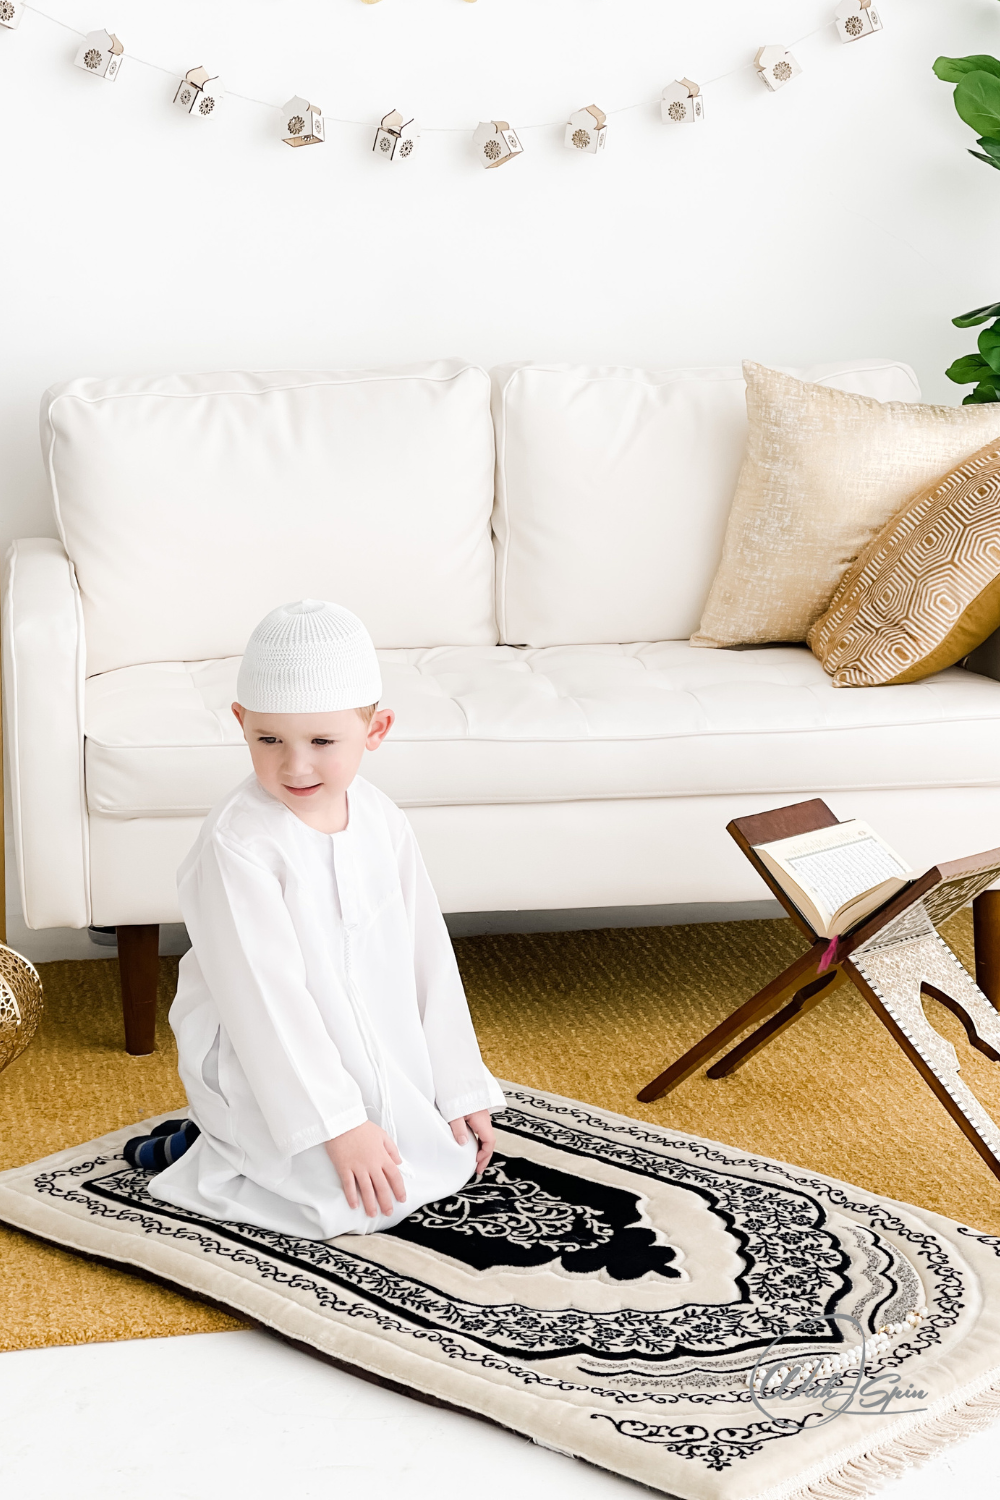 Tips to raise strong Muslim children